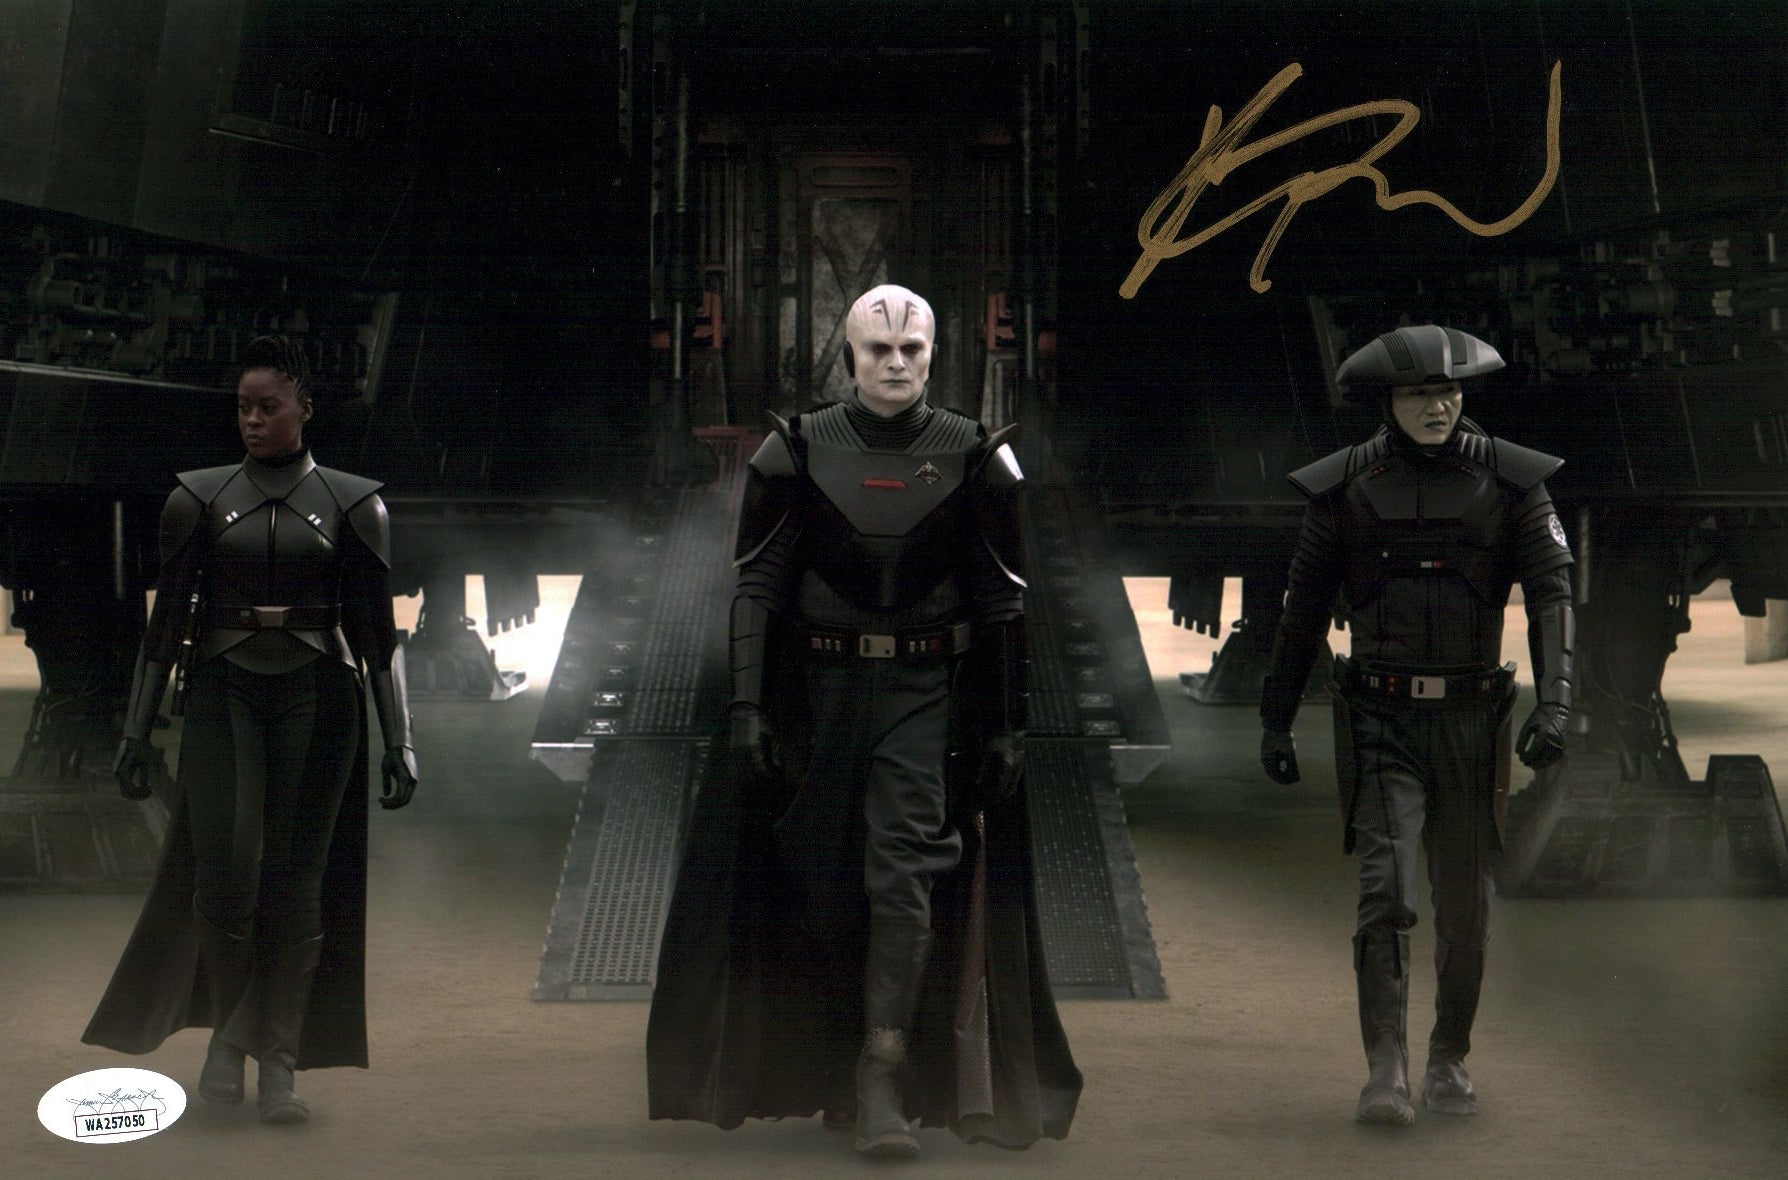 Rupert Friend Star Wars Obi-Wan Kenobi 8x12 Signed Photo JSA COA Certified Autograph